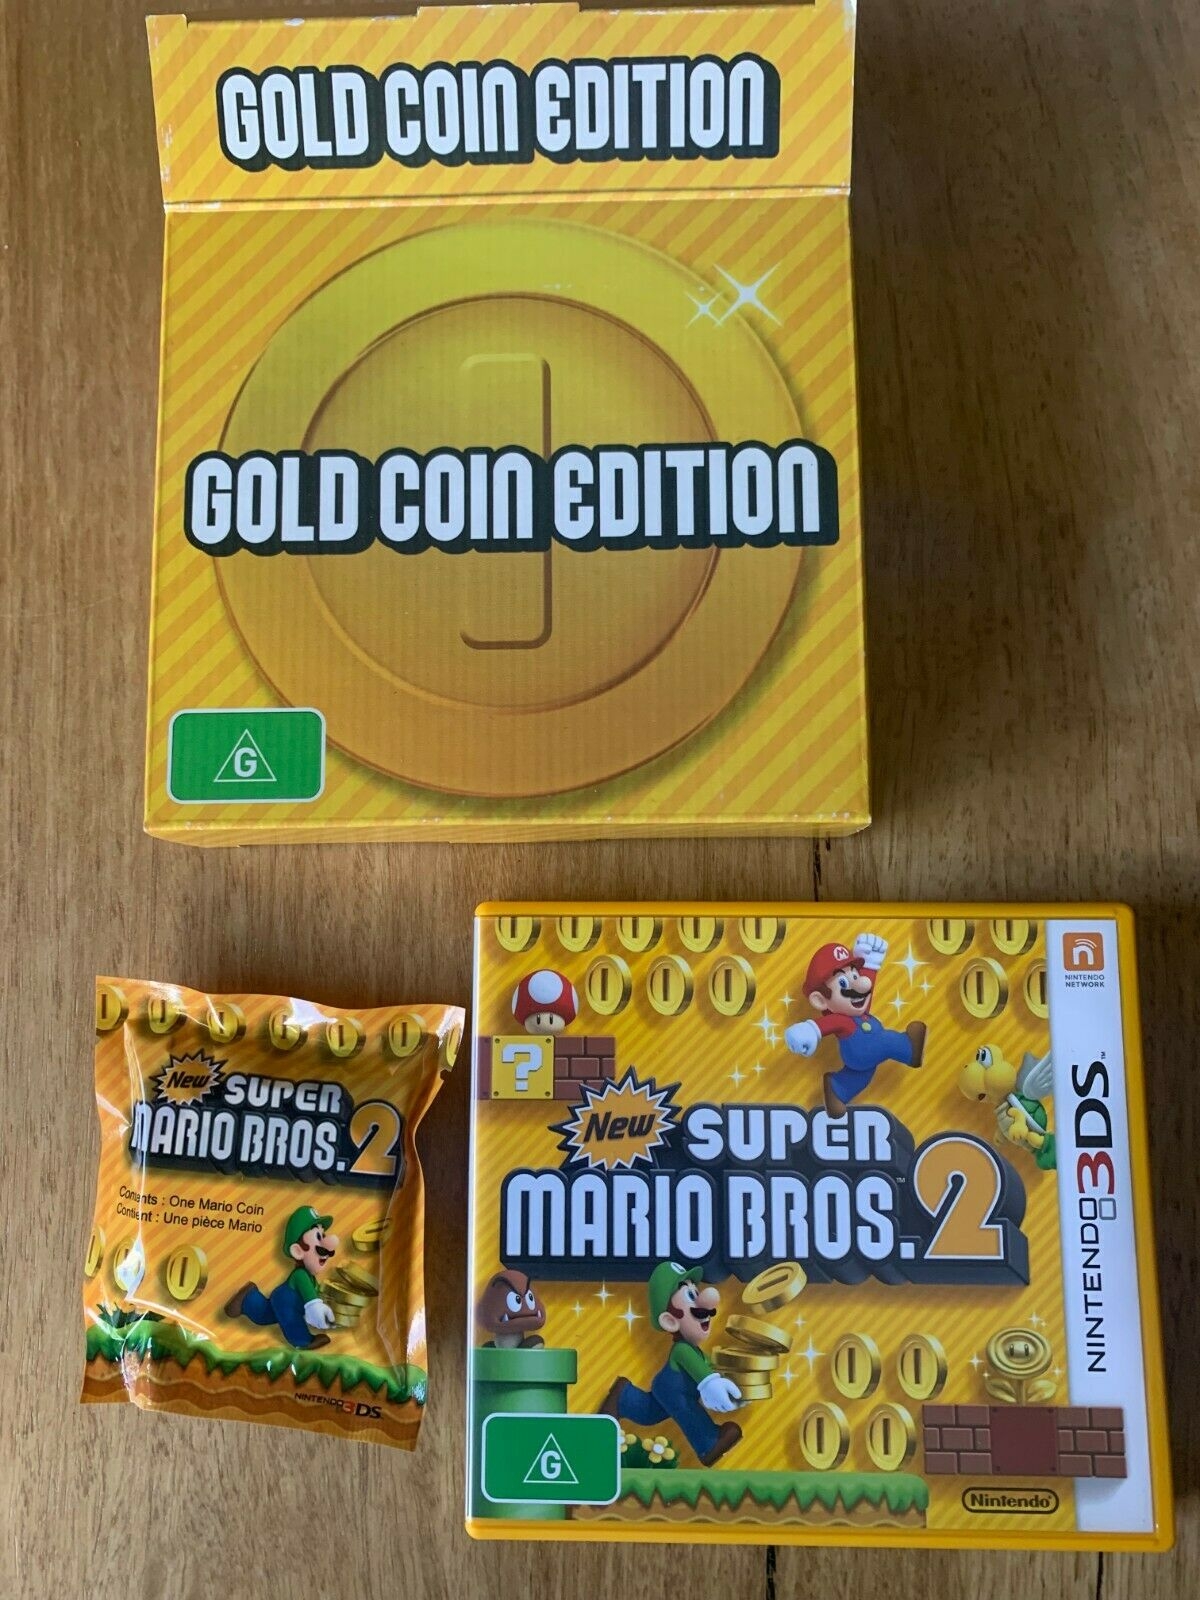 TGDB - Browse - Game - New Super Mario Bros. 2 [Gold Coin Edition]